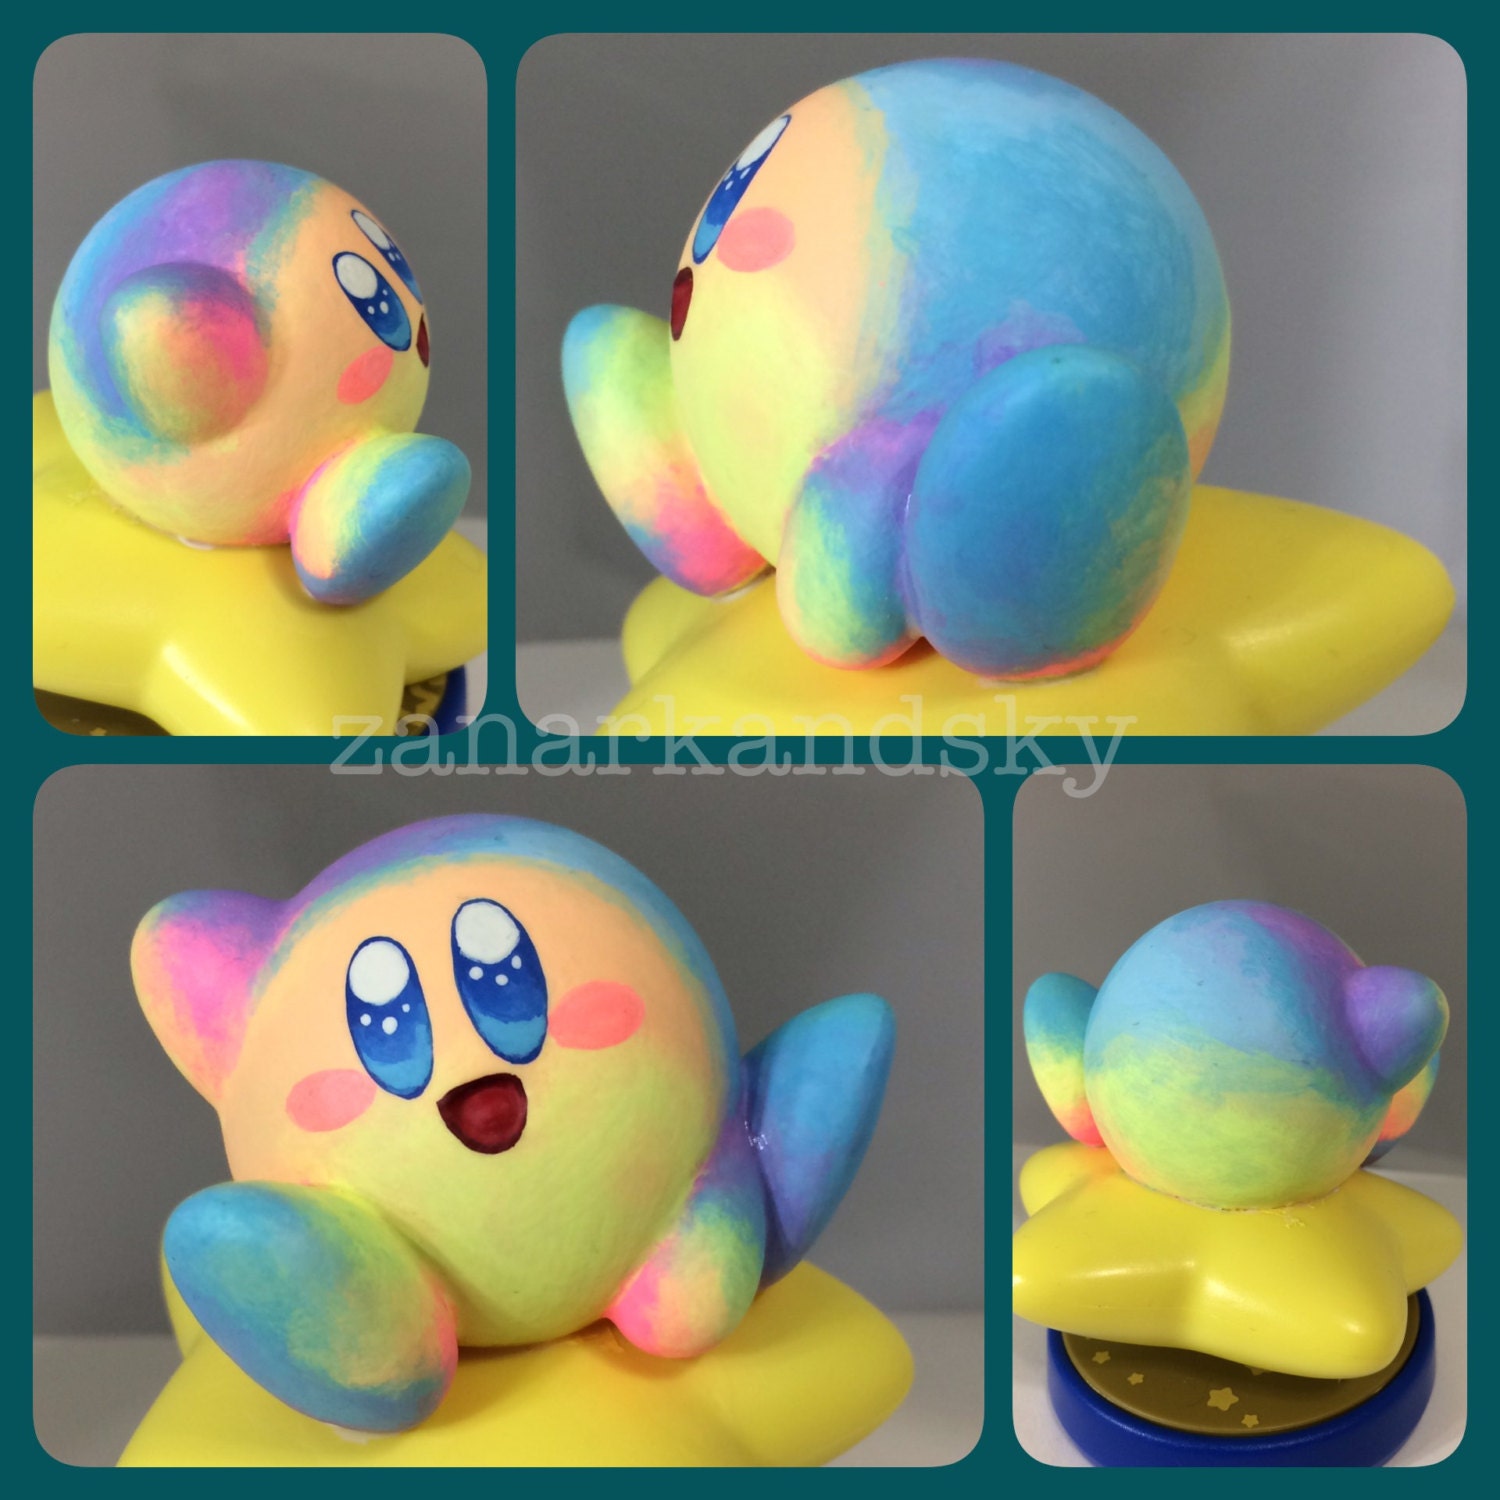 Custom amiibo Hypernova Kirby
 Hypernova Kirby